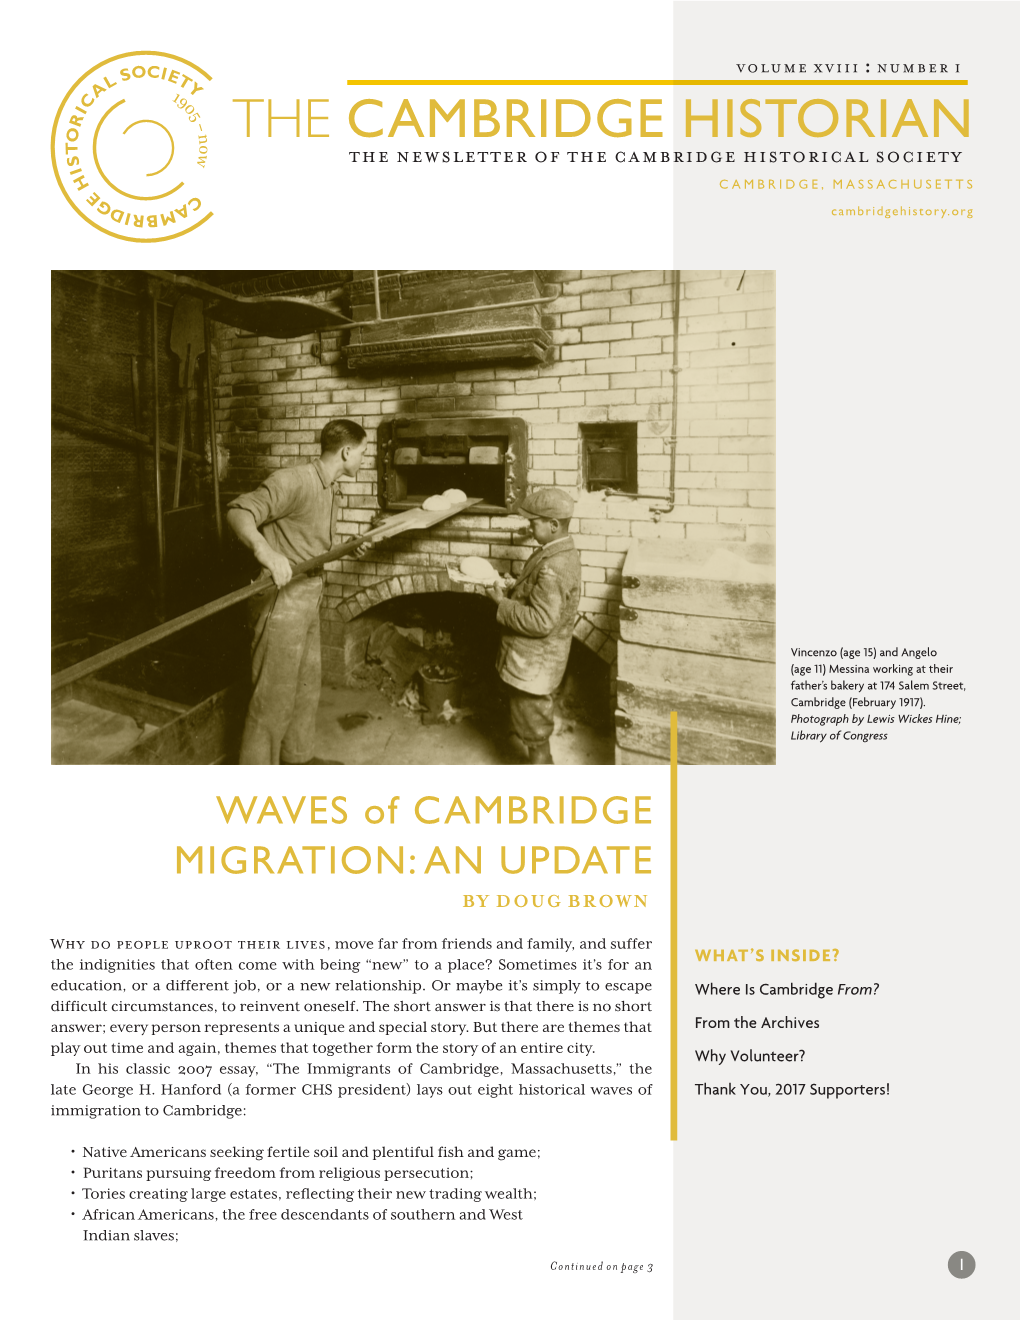 The Cambridge Historian Committee